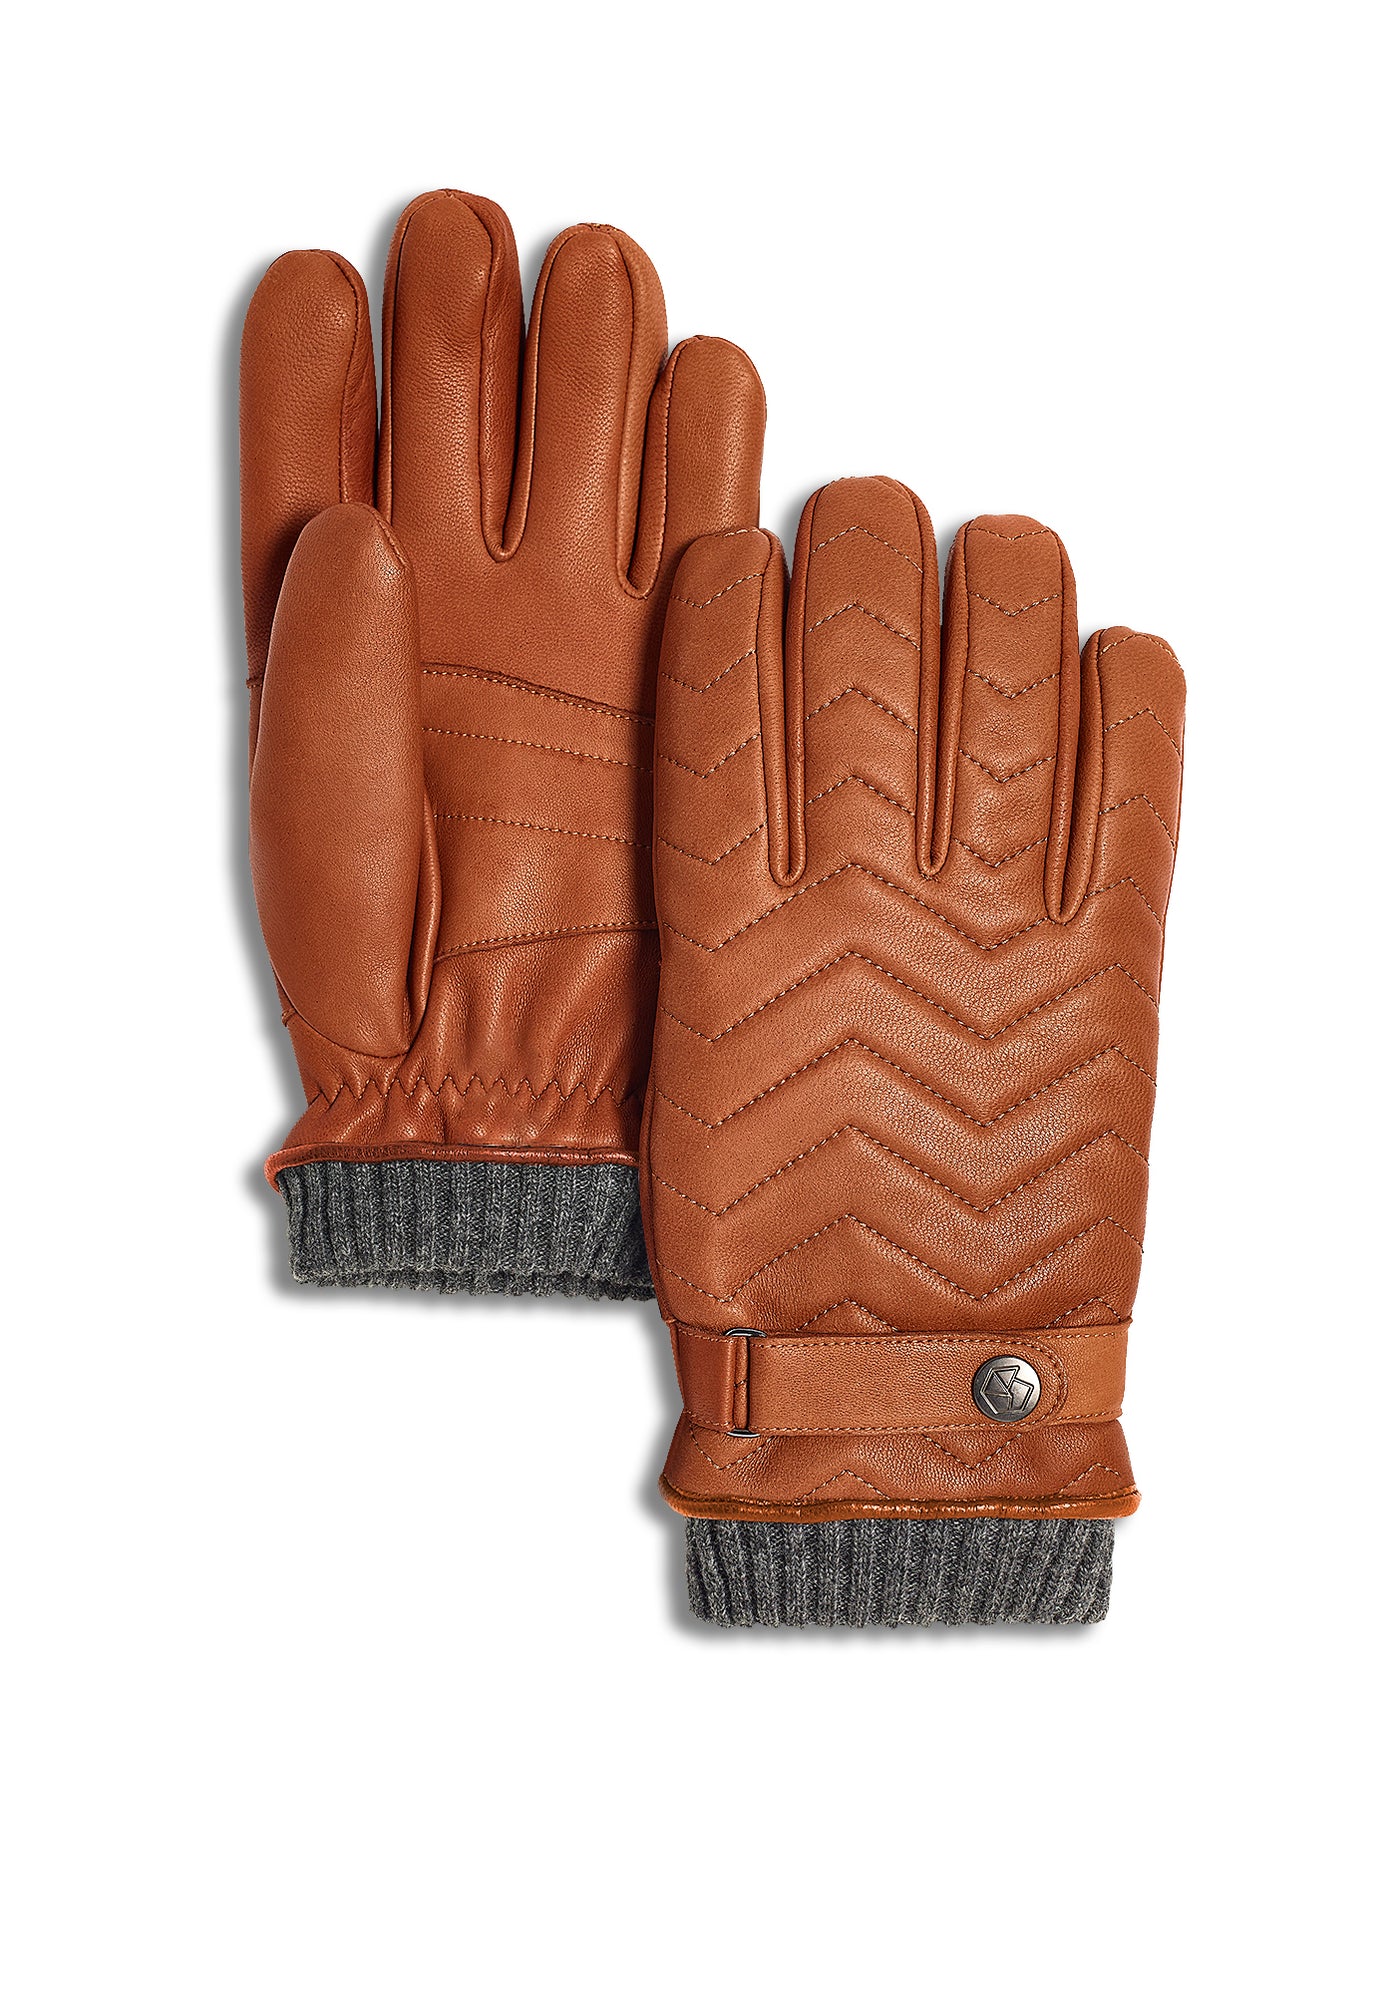 The Mackenzie Glove